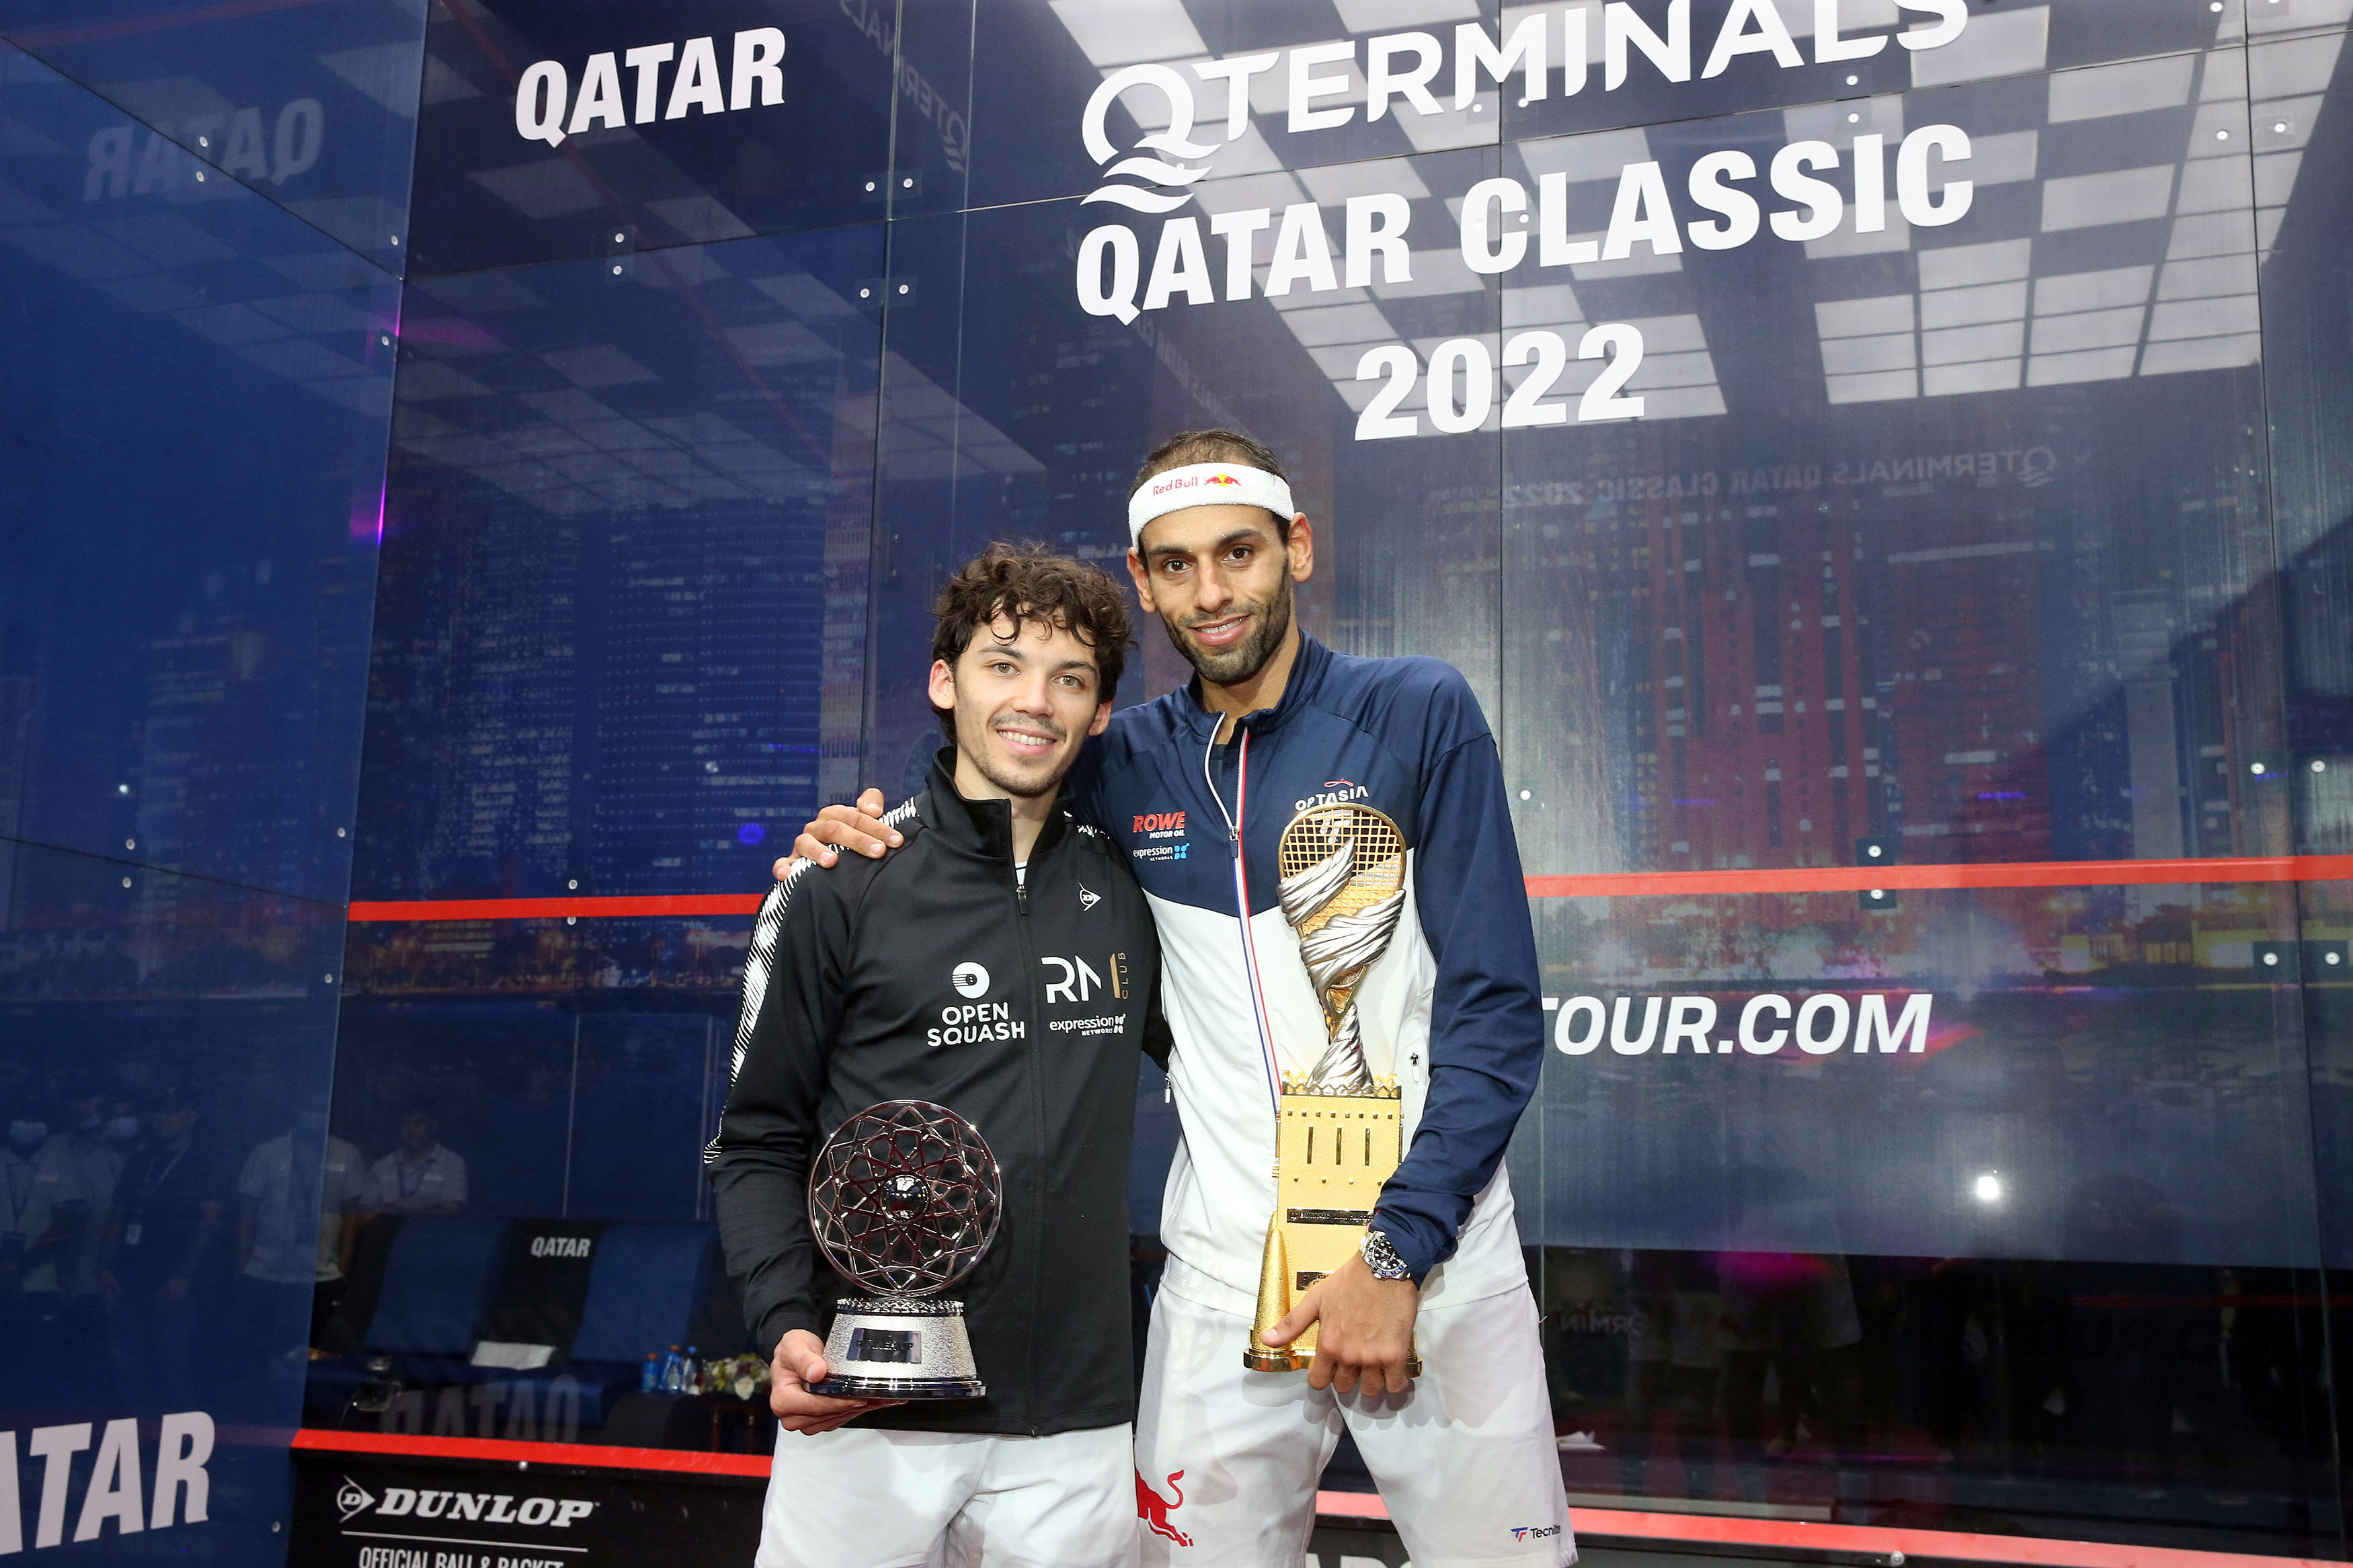 Qatar Classic finale photo 2